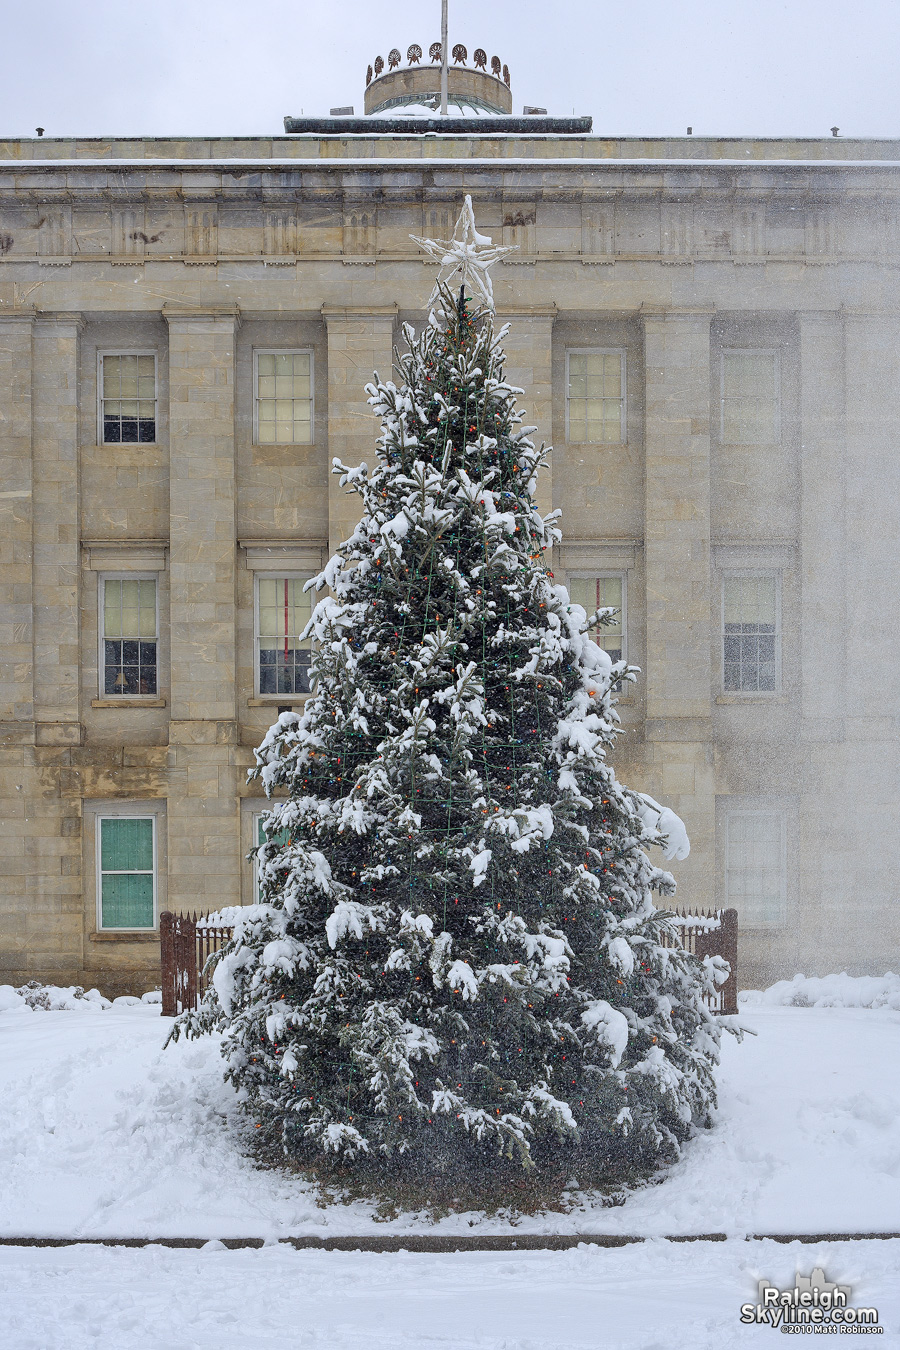 Capitol Christmas tree